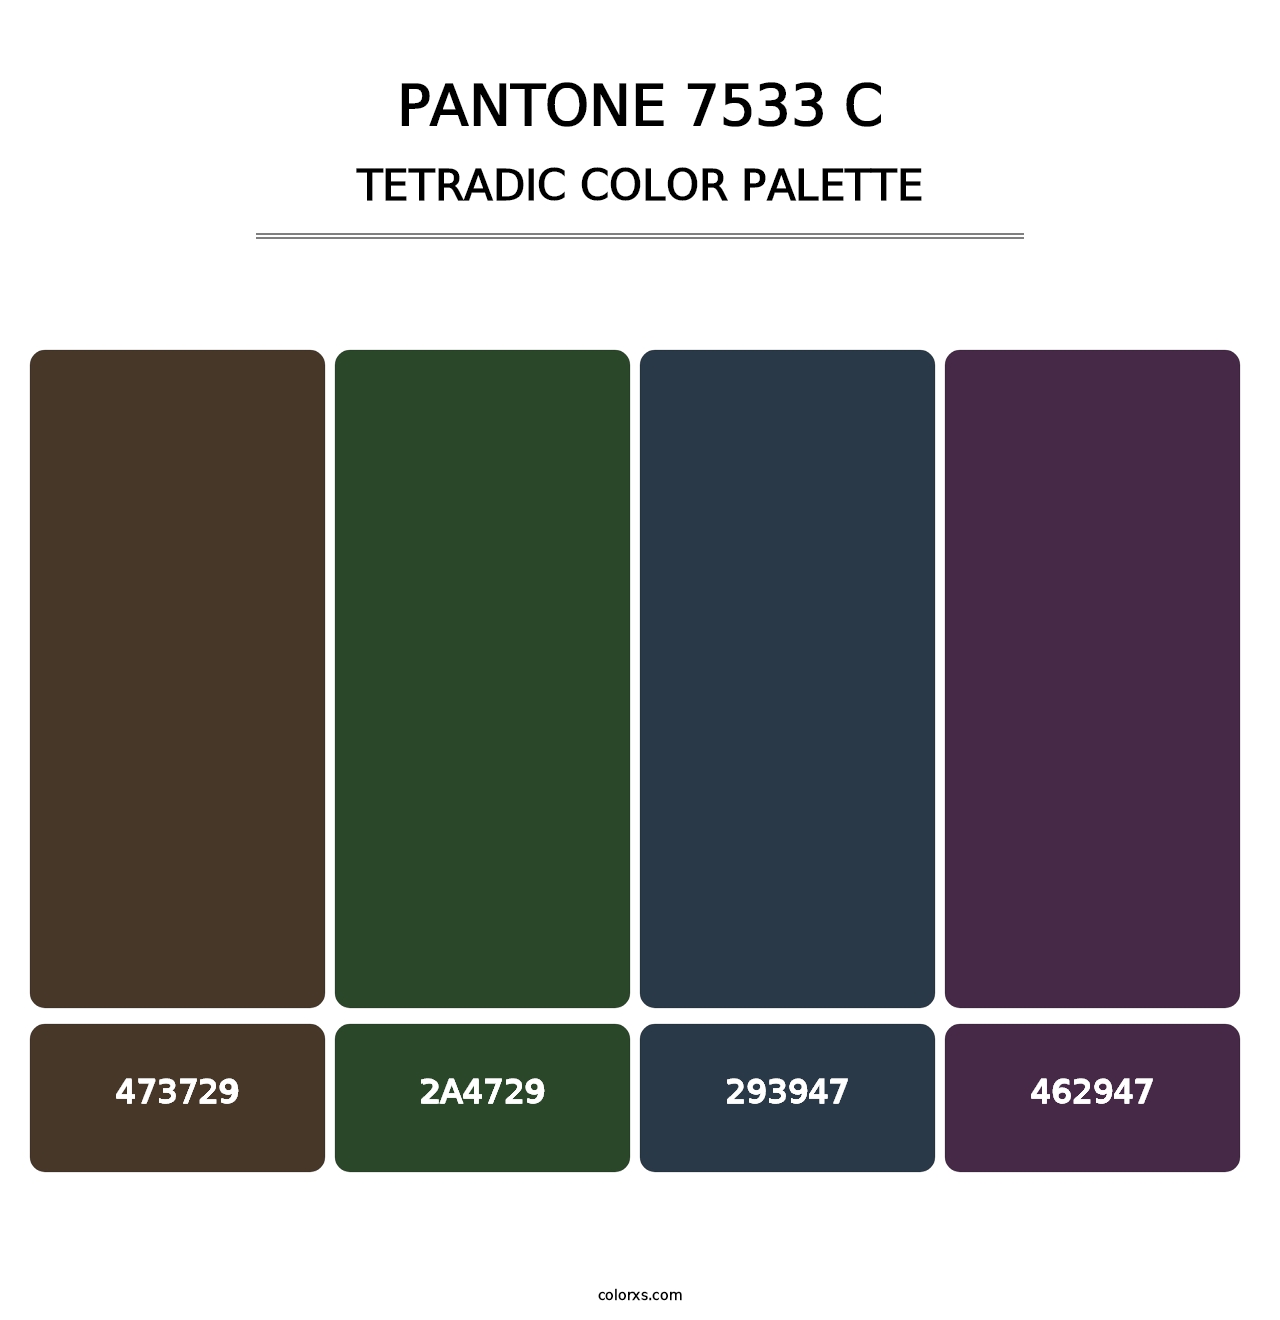 PANTONE 7533 C - Tetradic Color Palette